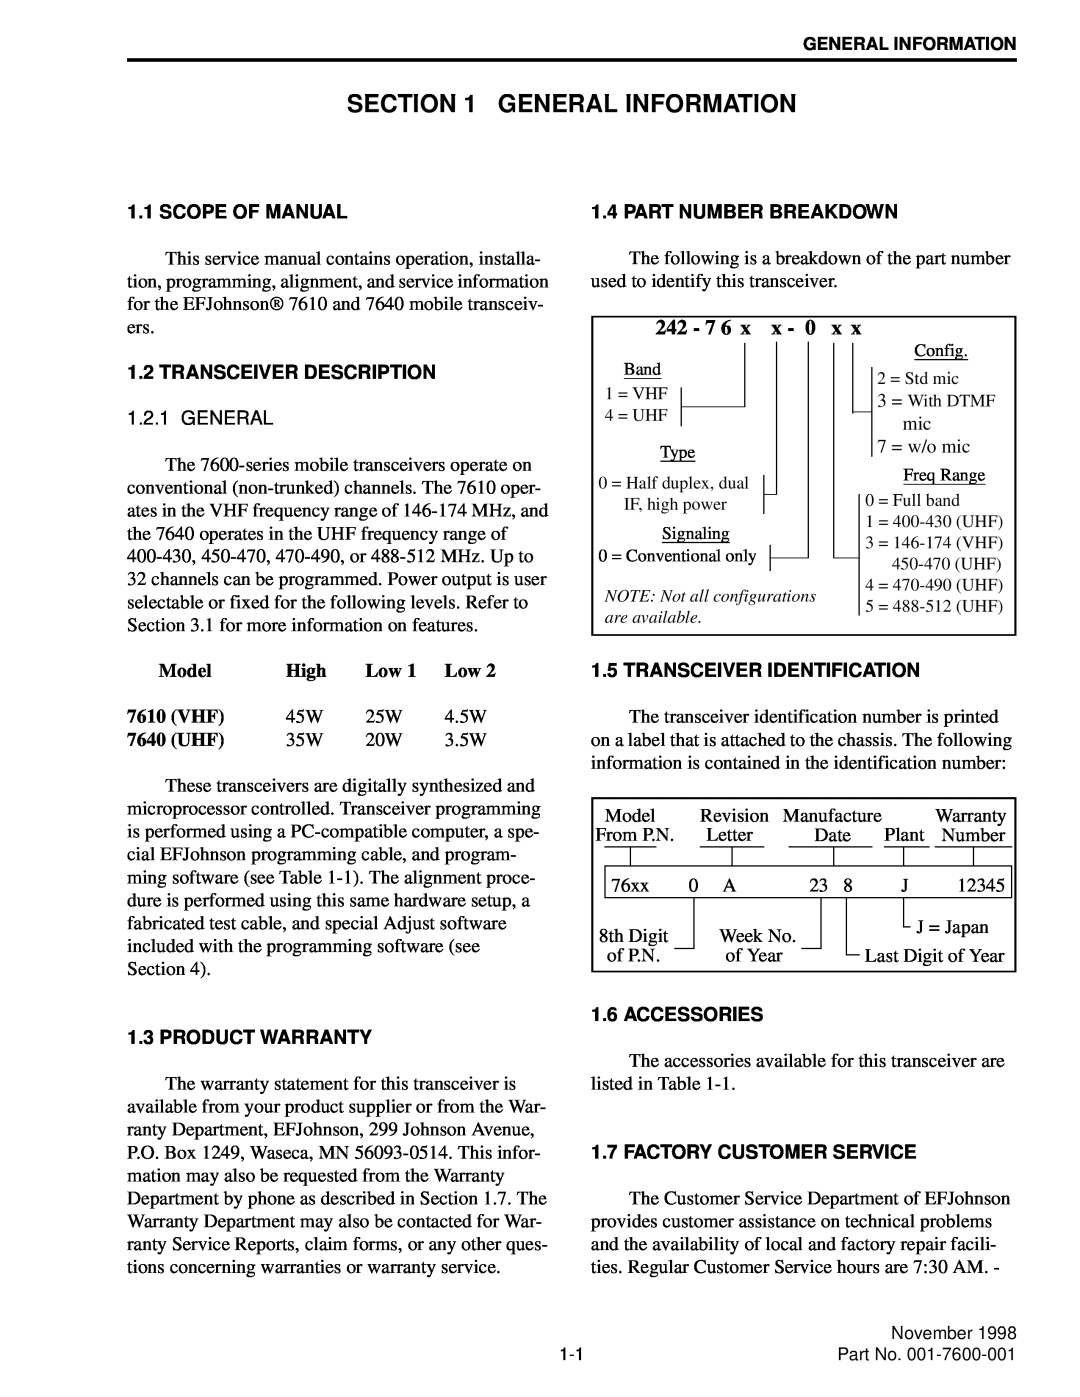 EFJohnson 764X General Information, Scope Of Manual, Transceiver Description, Product Warranty, Part Number Breakdown 